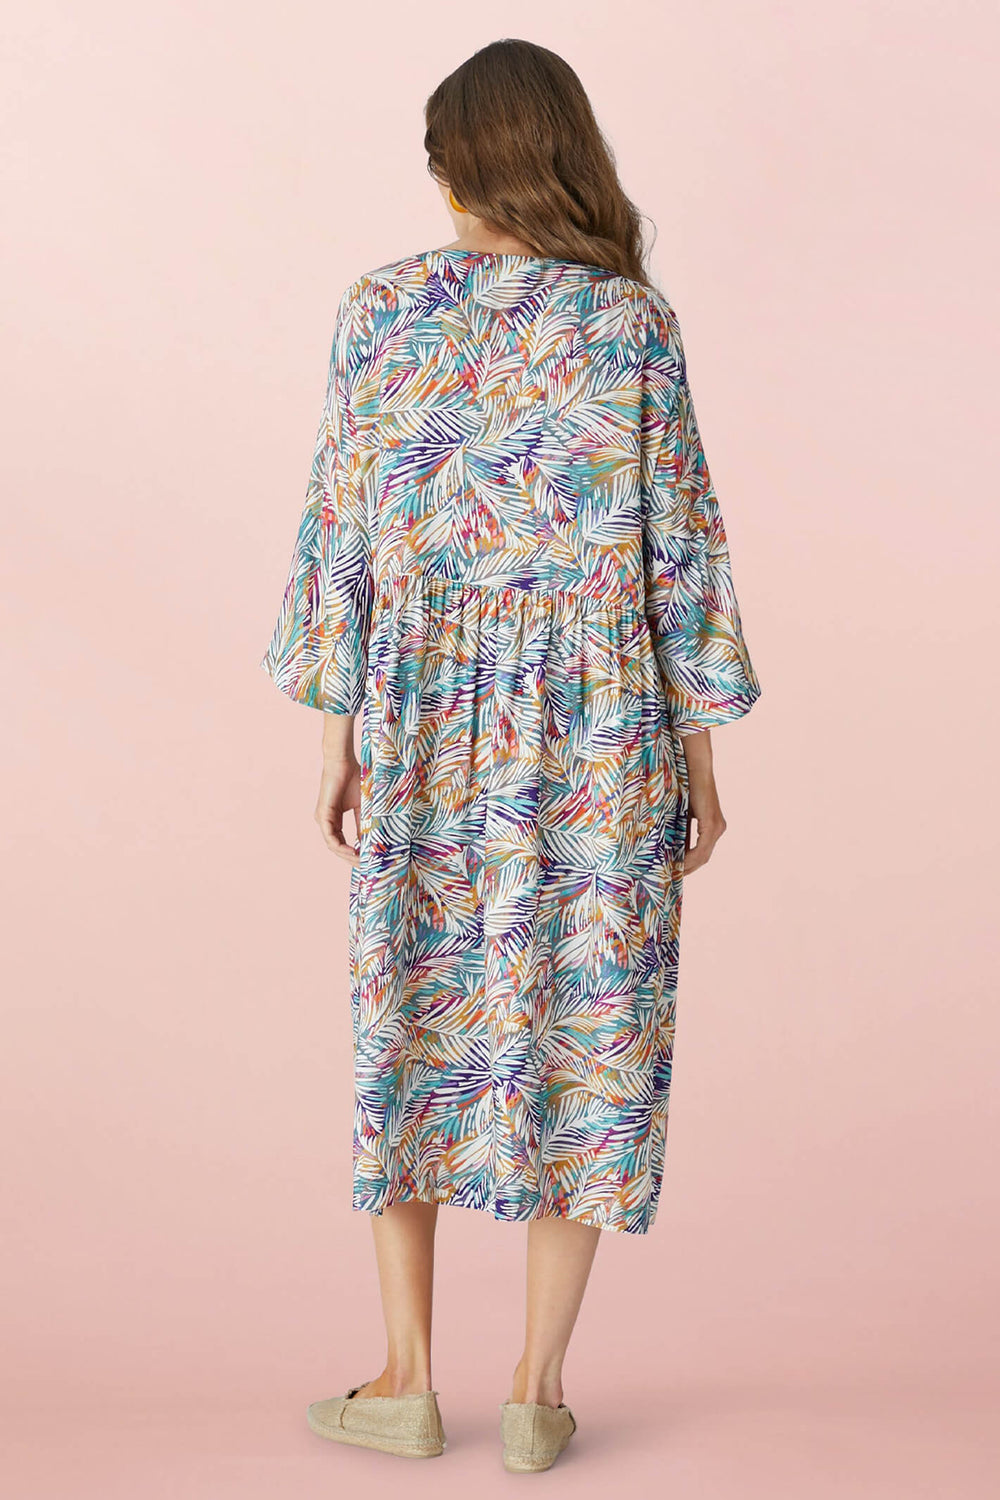 Sahara GTD4325 NLP Feathery Fern Print Multicoloured Easy Dress - Shir;ley Allum Boutique